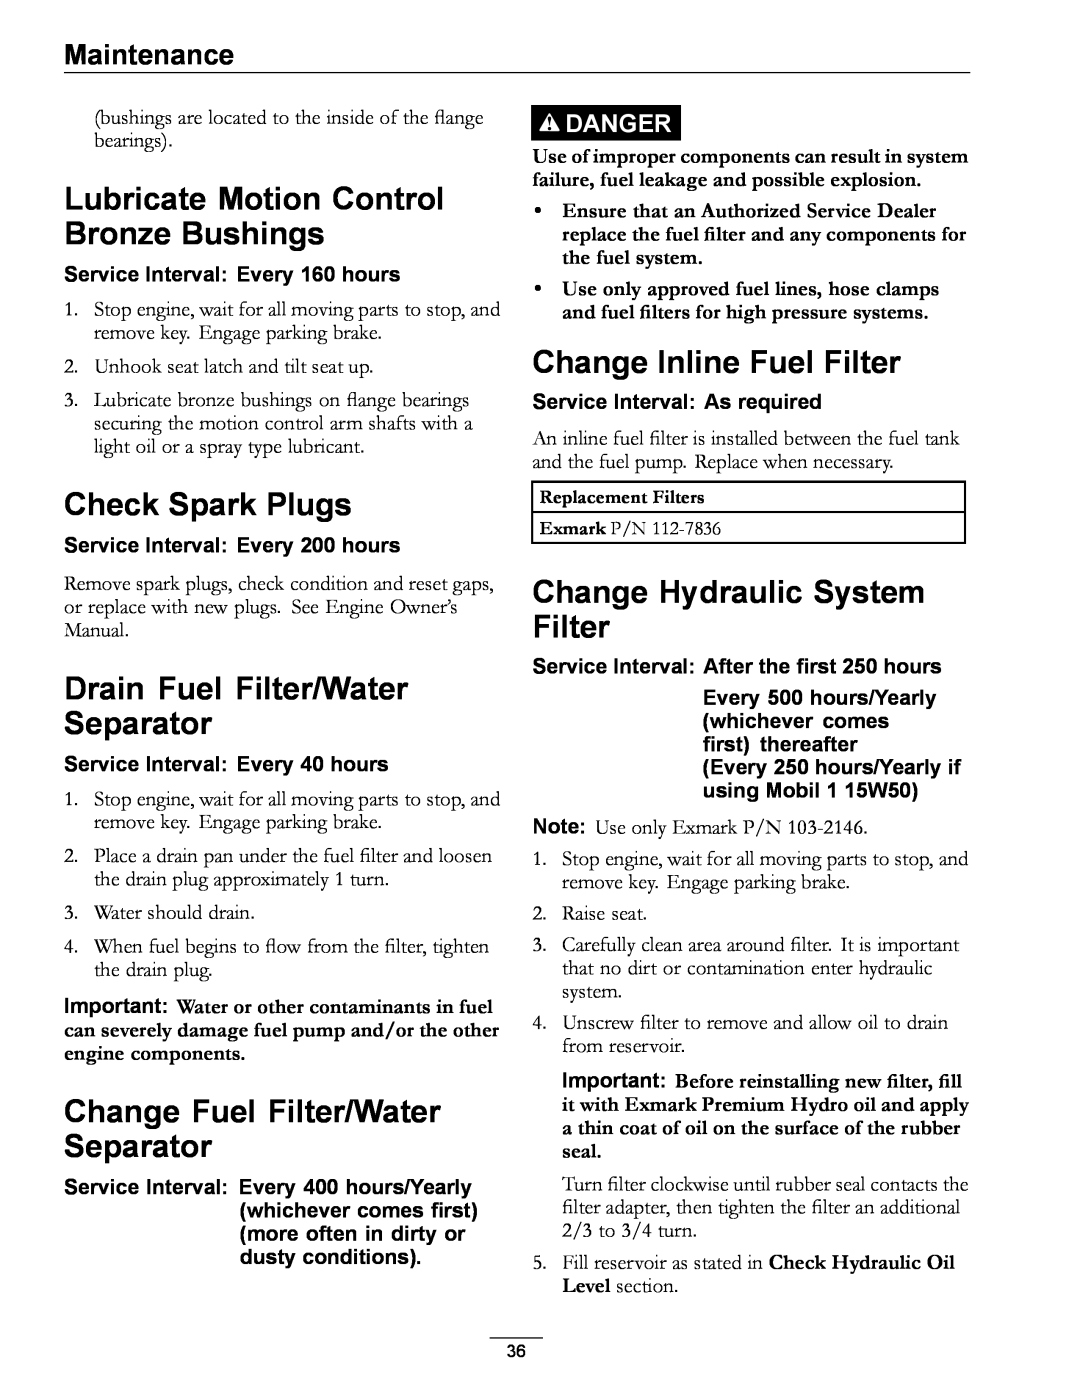 Exmark 920 Lubricate Motion Control Bronze Bushings, Check Spark Plugs, Drain Fuel Filter/Water Separator, Maintenance 